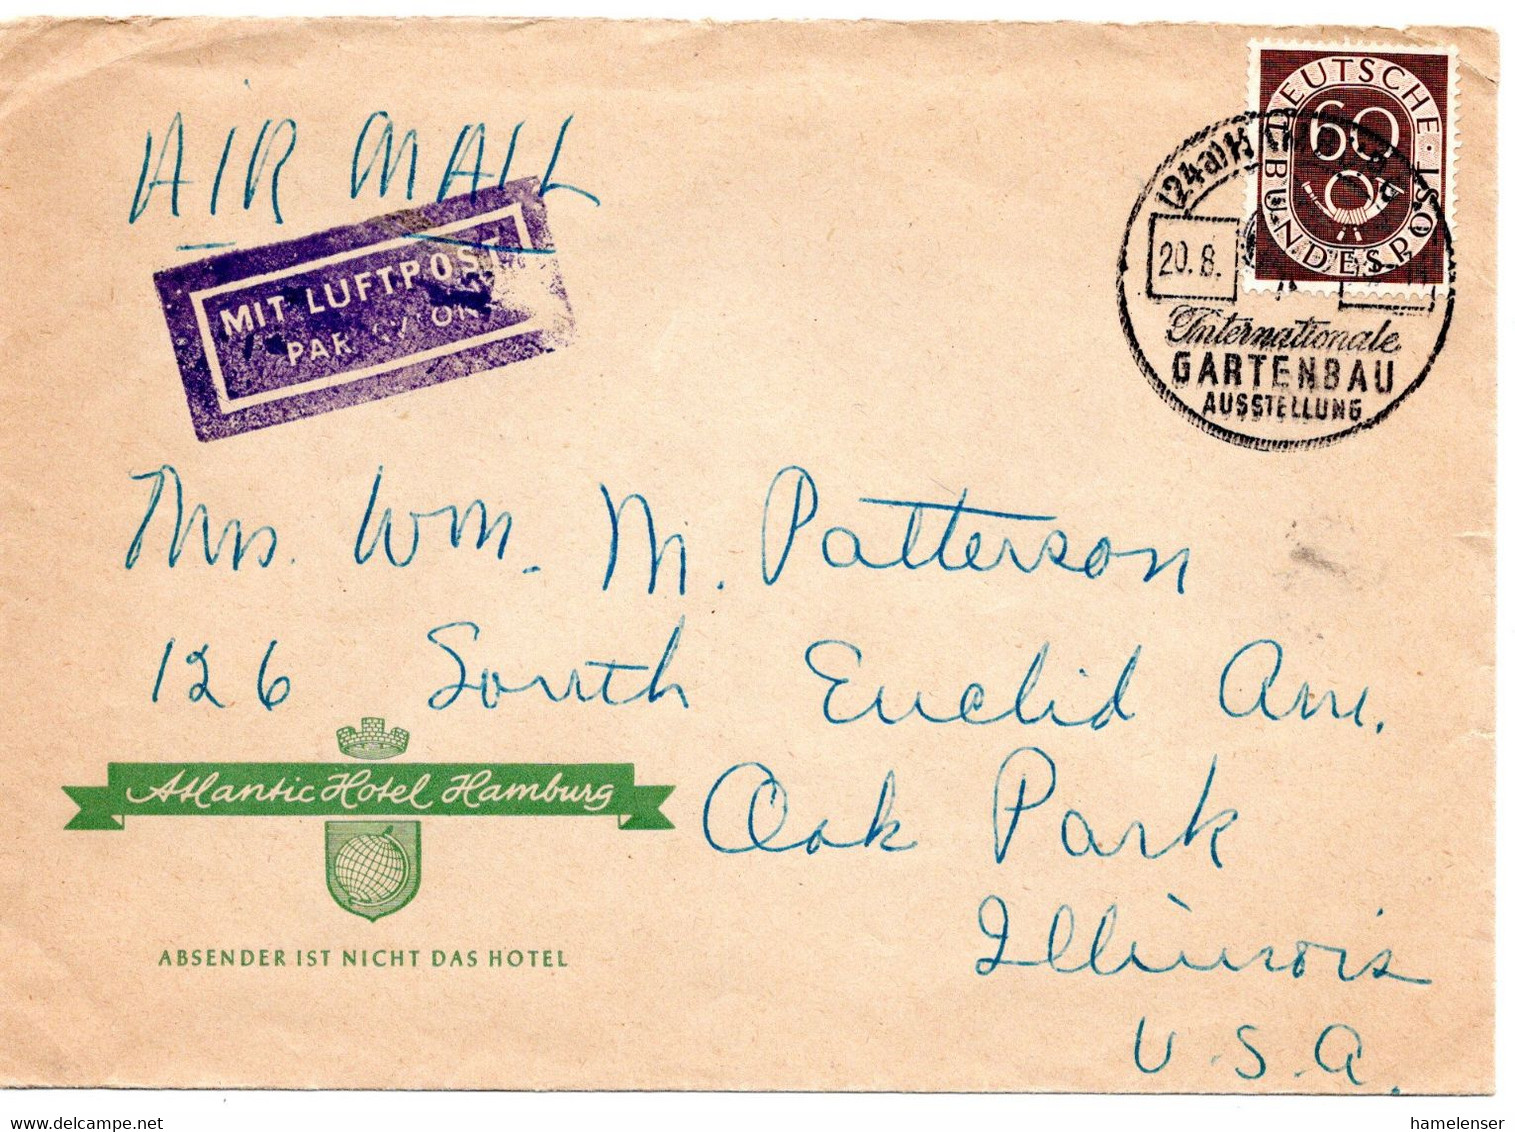 55680 - Bund - 1953 - 60Pfg. Posthorn EF A. LpBf. M. SoStpl. HAMBURG - GARTENBAUAUSSTELLUNG -> Oak Park, IL (USA) - Storia Postale